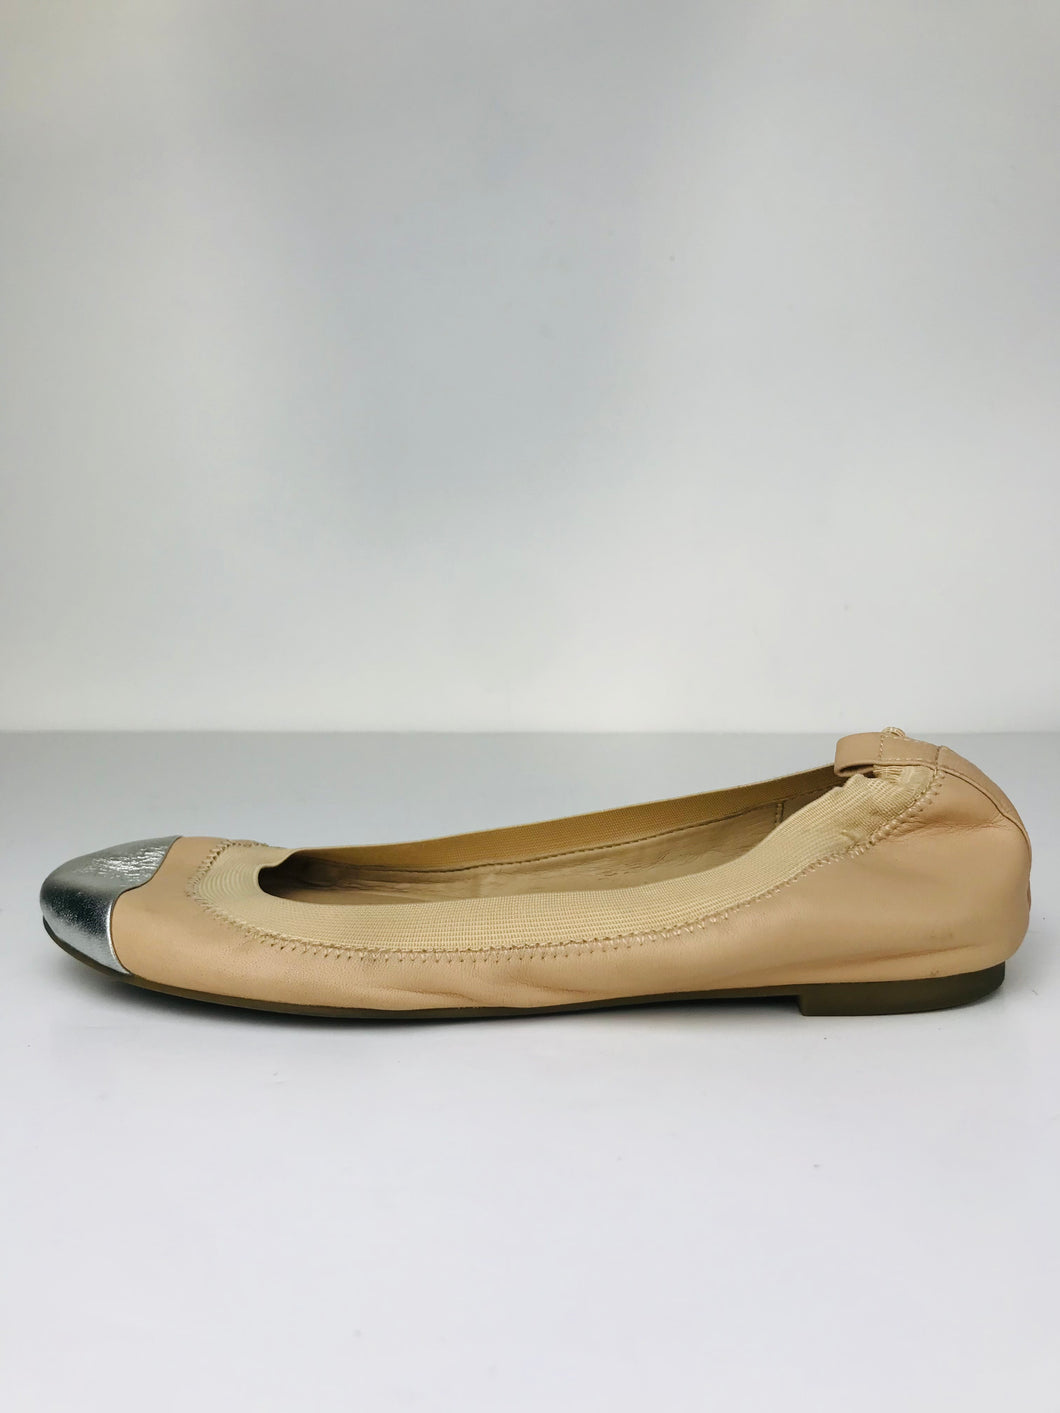 Dune Women's Leather Slip On Flats Shoes | EU37 UK4 | Beige